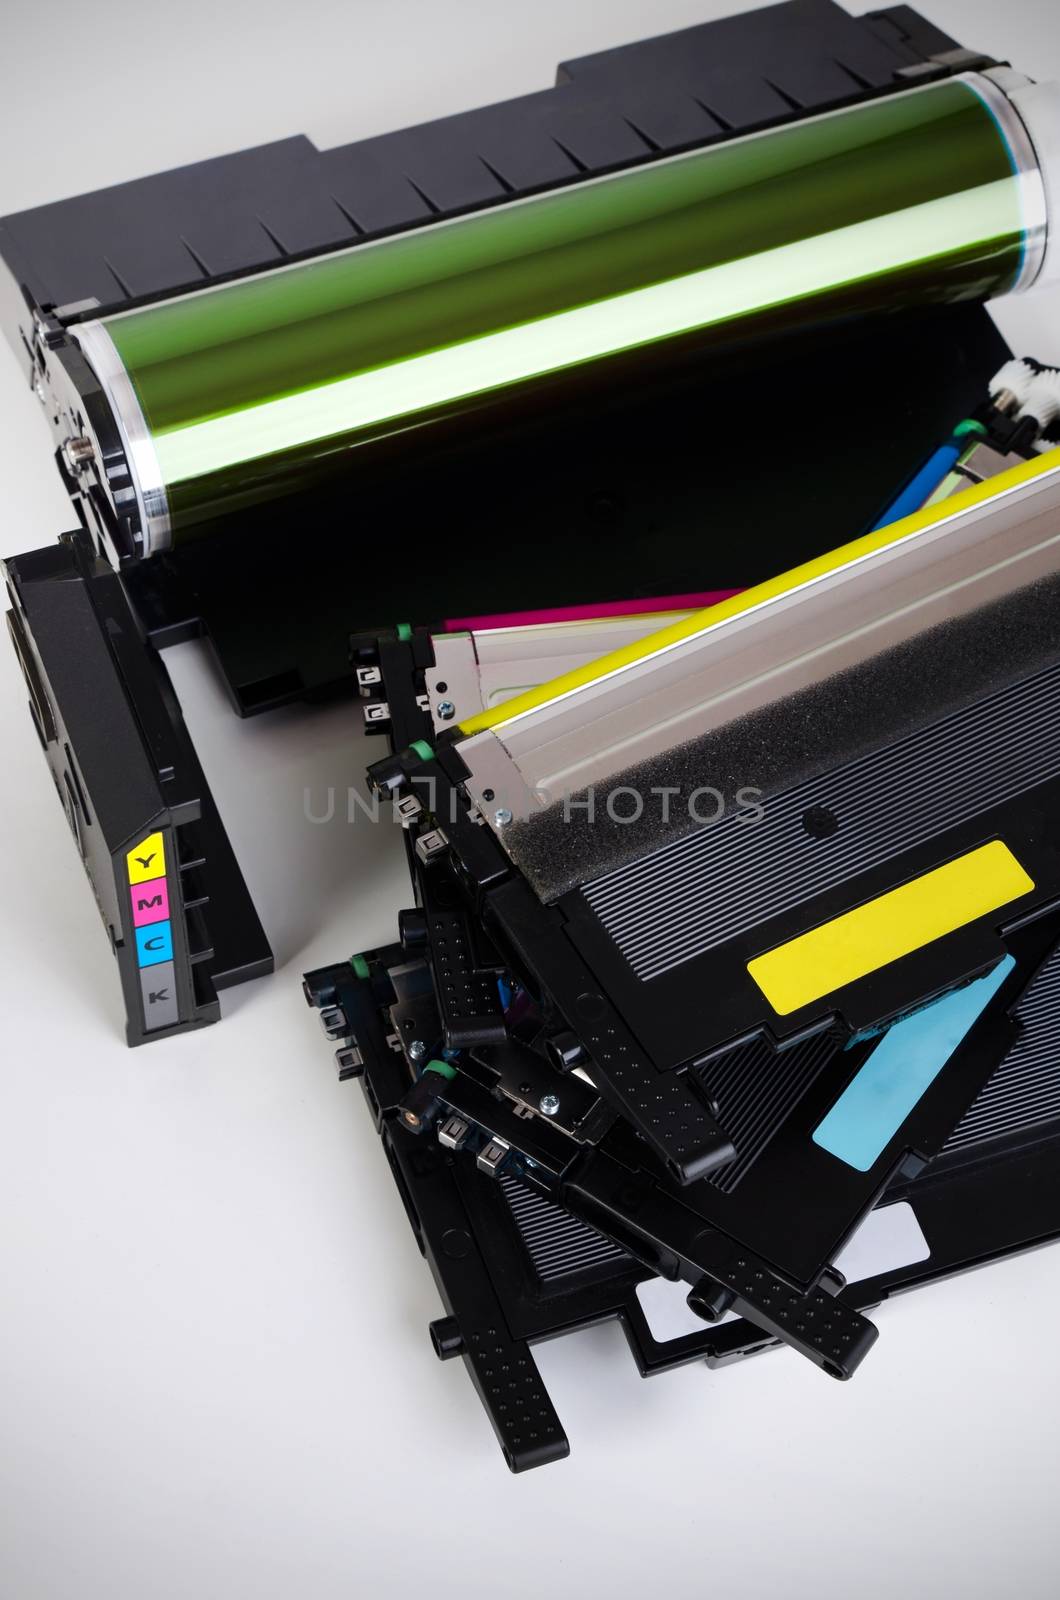 Toner cartridge set for laser printer. Computer supplies on white background.